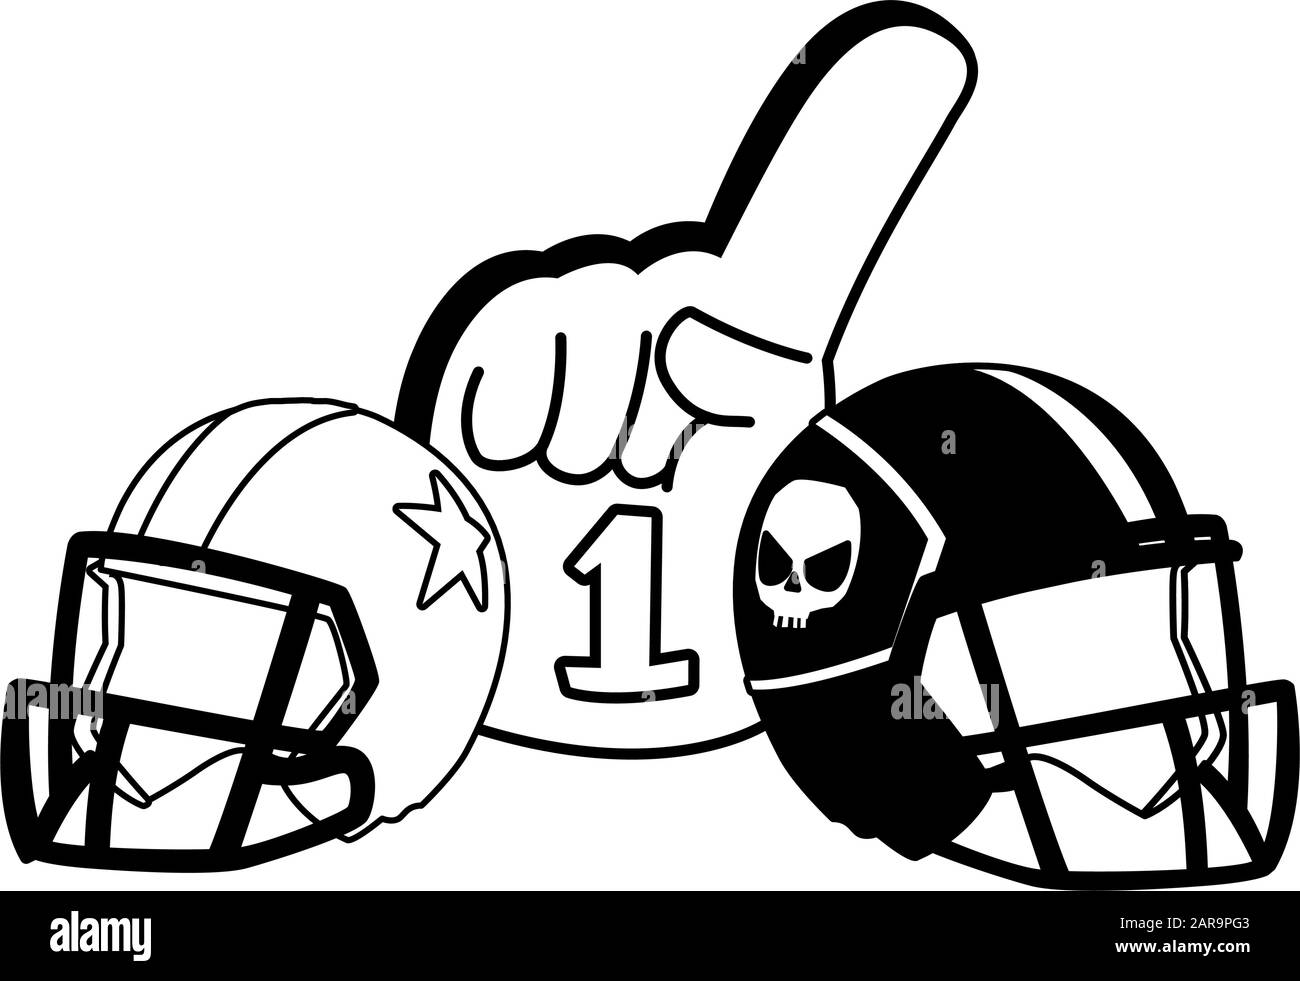 american football helmets and hand gloves on white background vector illustration design Stock Vector